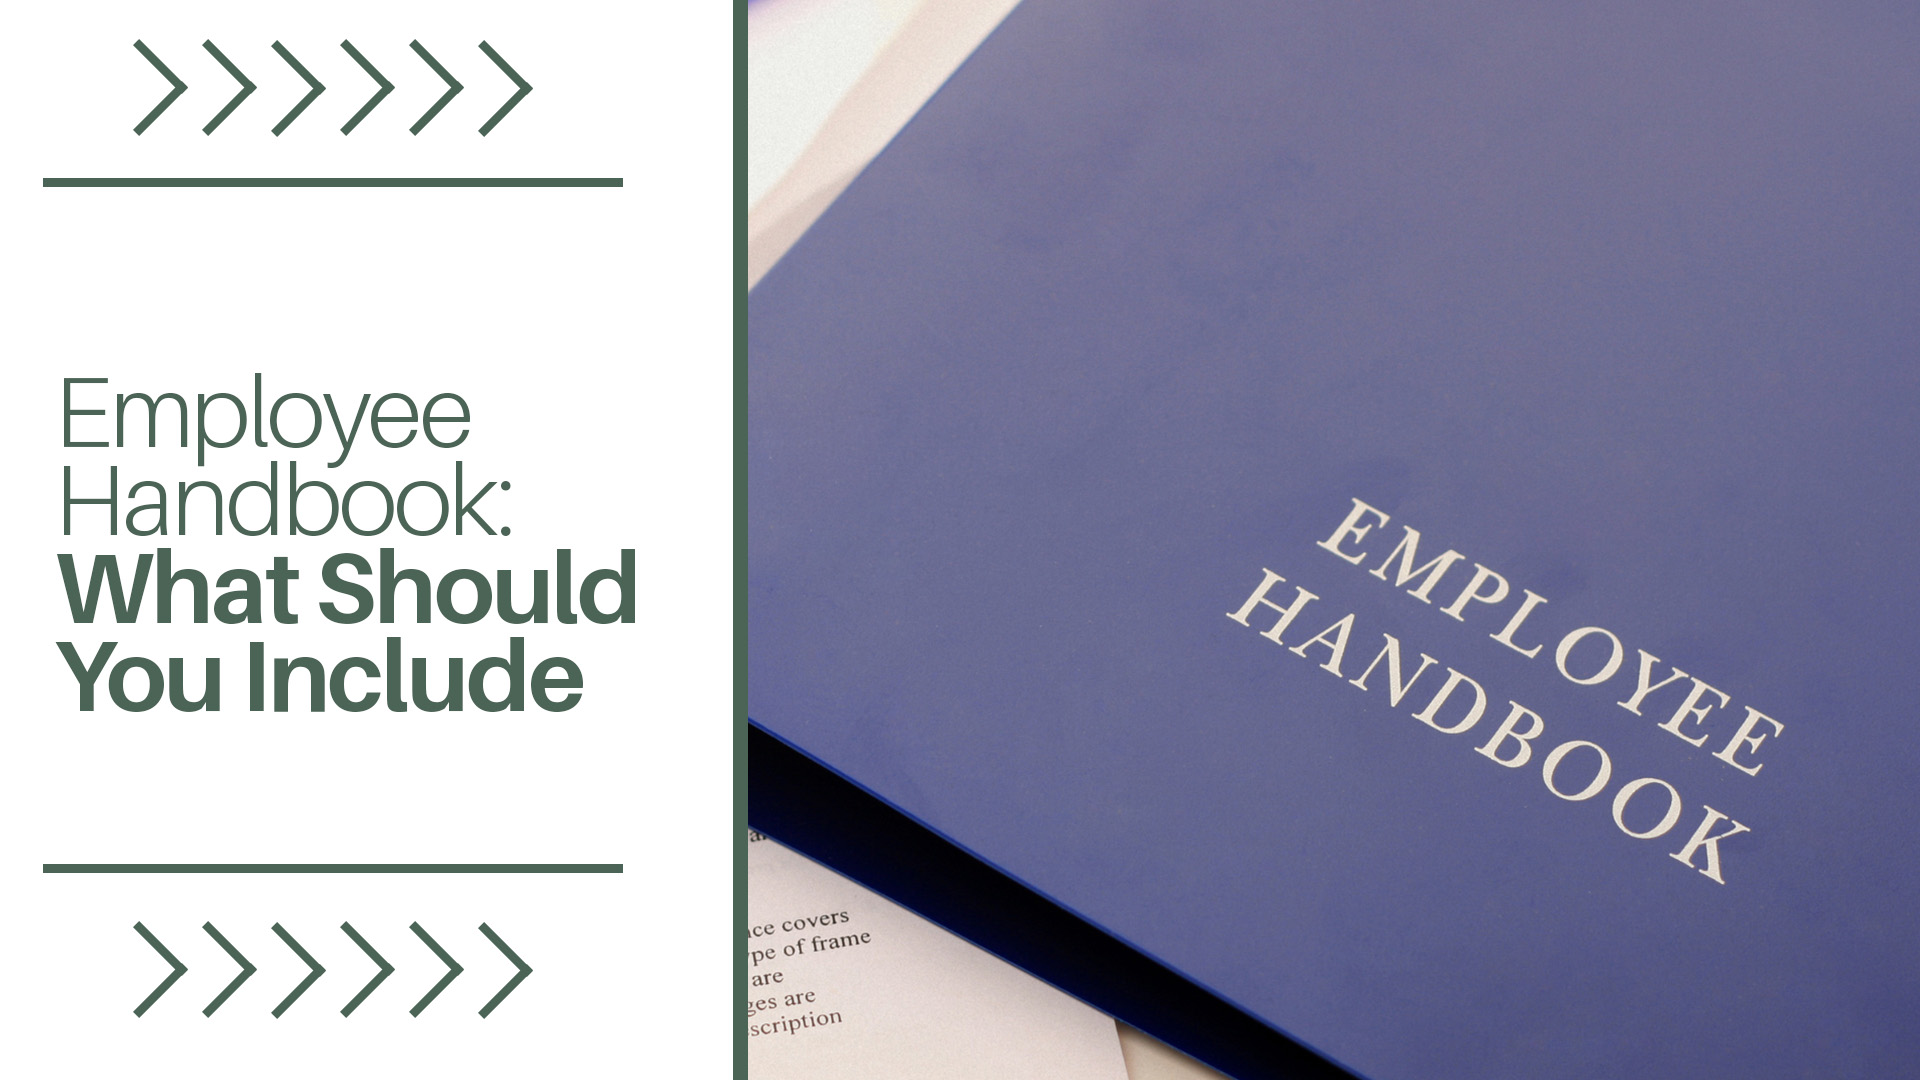 Employee Handbook: What Should You Include?